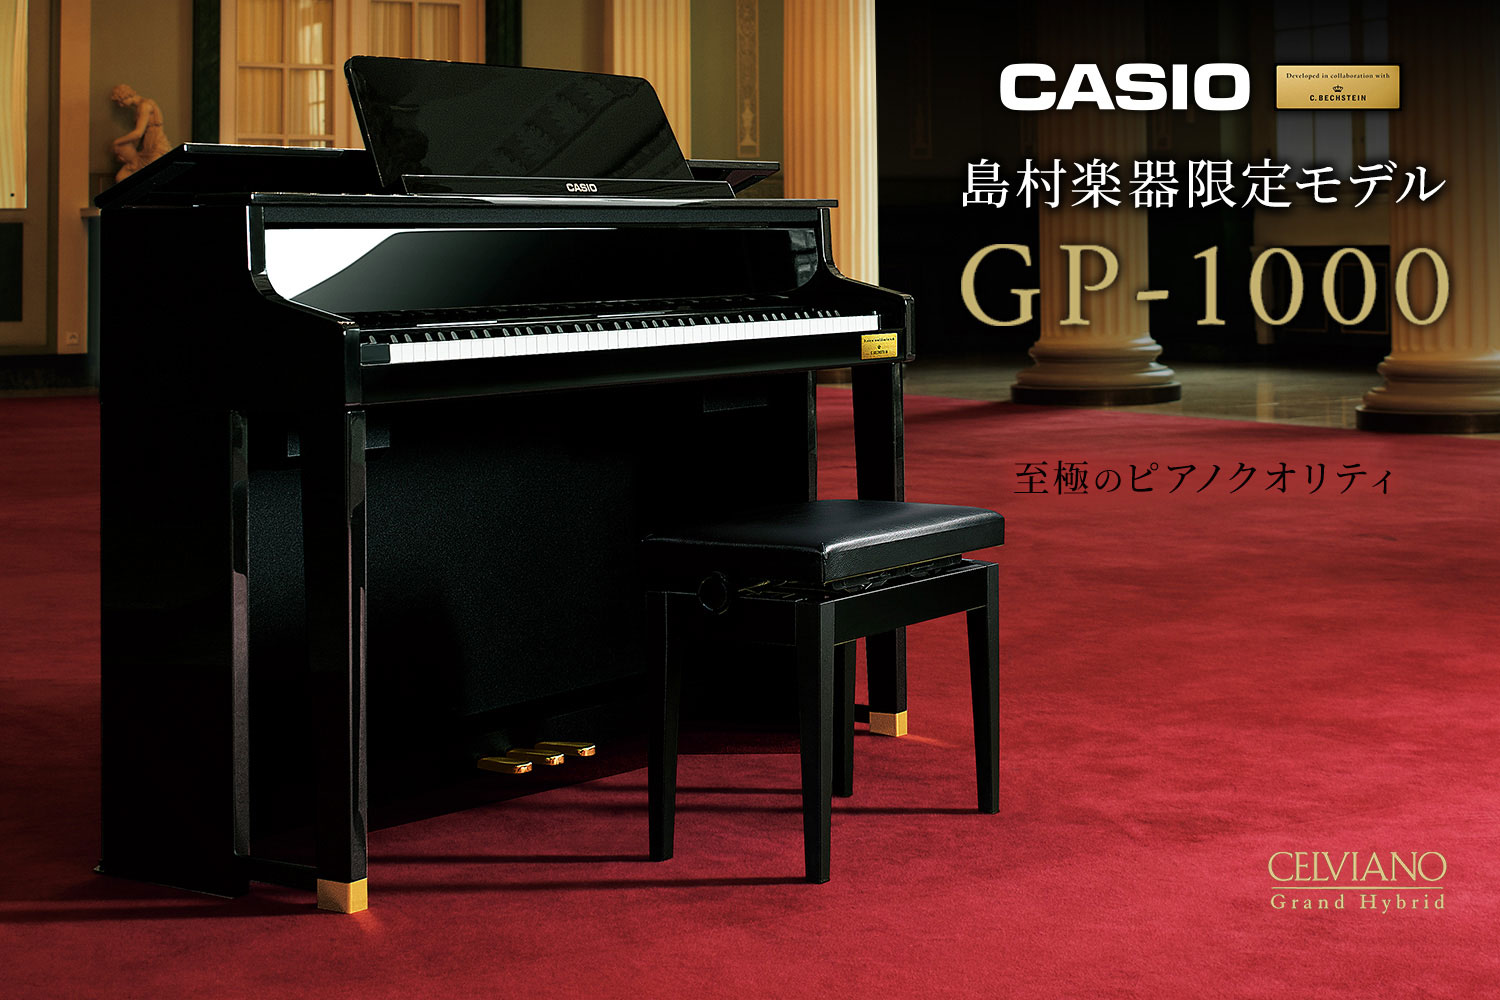 CASIO×C.ベヒシュタイン コラボレーション電子ピアノ島村楽器限定モデル「GP-1000」入荷しました！